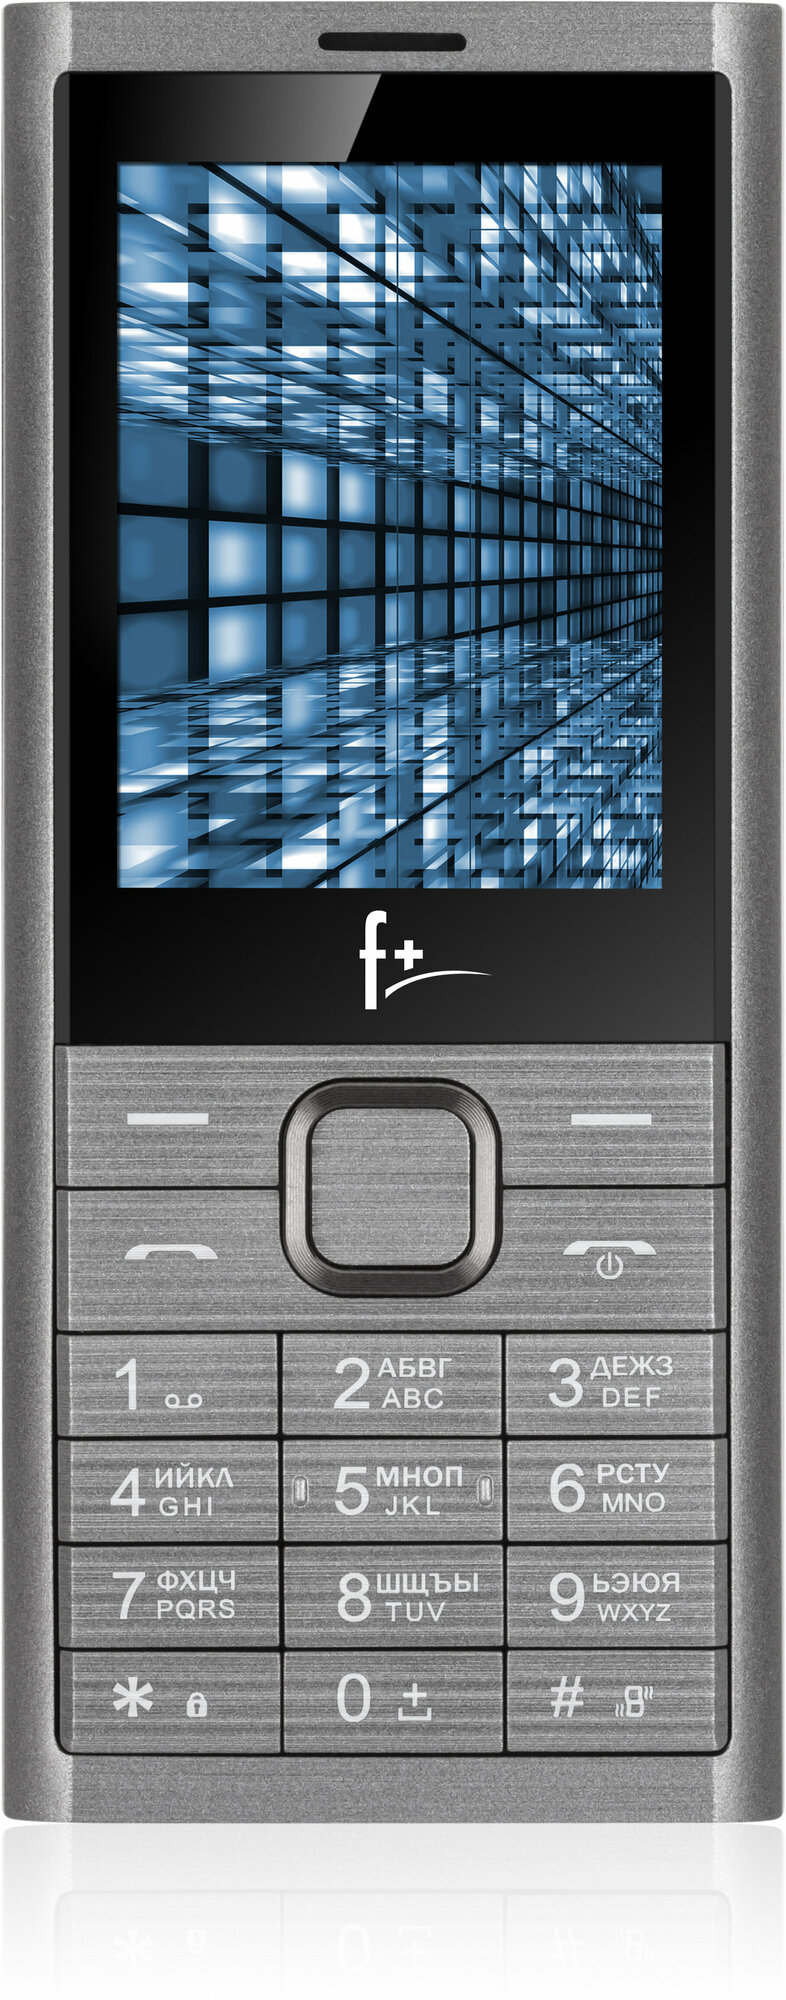 Мобильный телефон F+ B280 2.8", 2500 мА·ч, micro-USB, темно-серый (B280 Dark Grey)